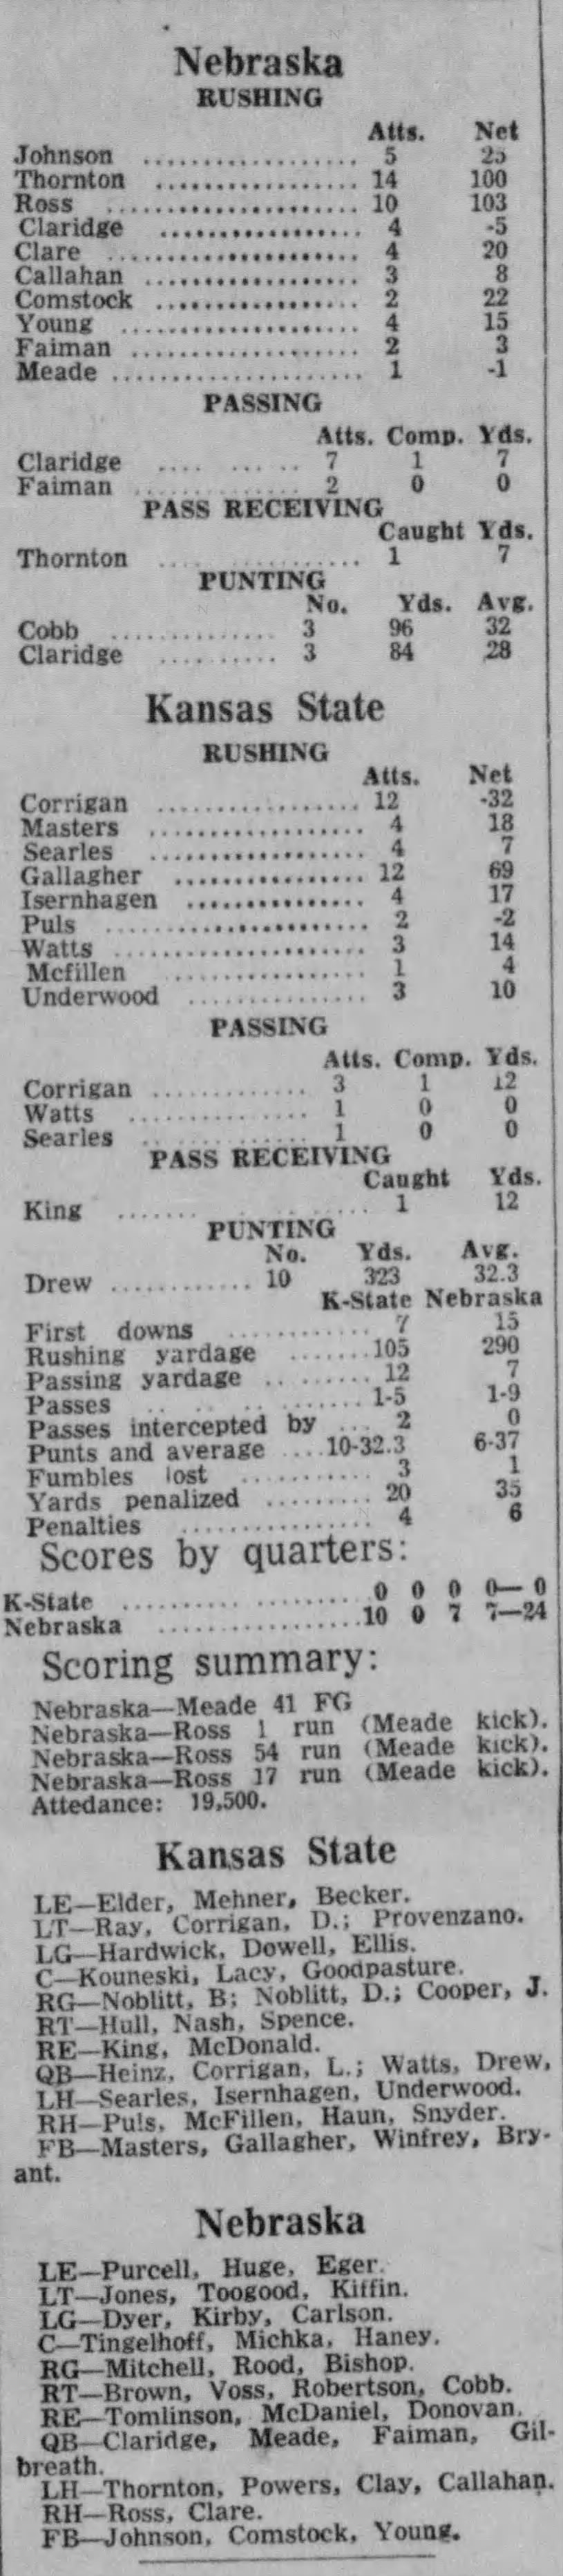 1961 Nebraska-Kansas State football game stats